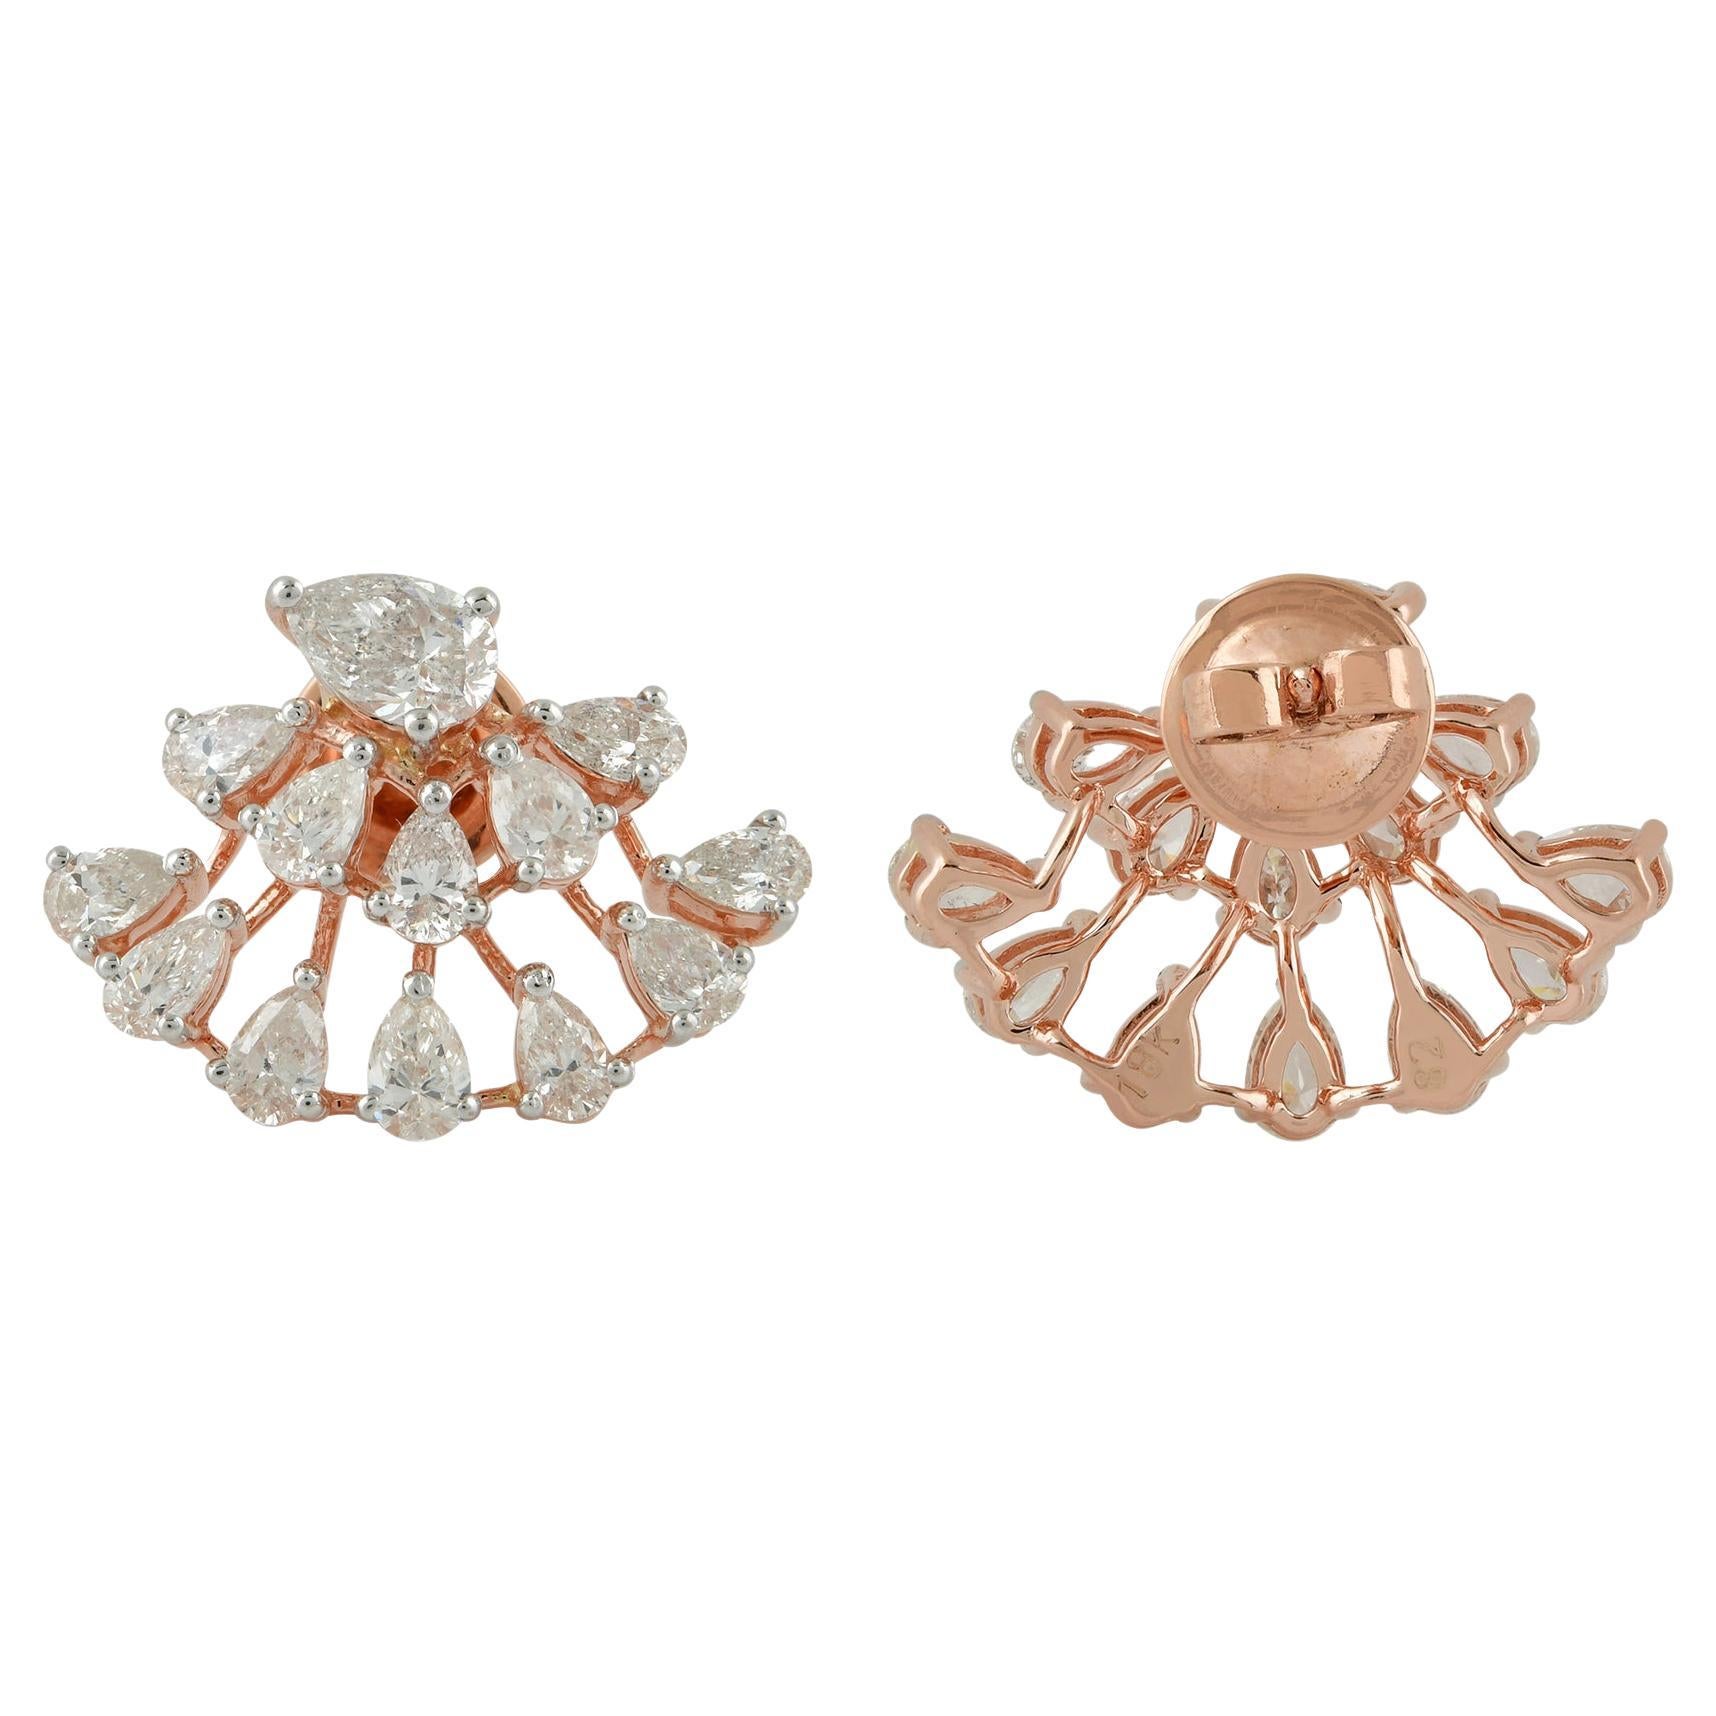 3.10 Carat Pear Shape Diamond Stud Earrings Solid 14k Rose Gold Handmade Jewelry For Sale